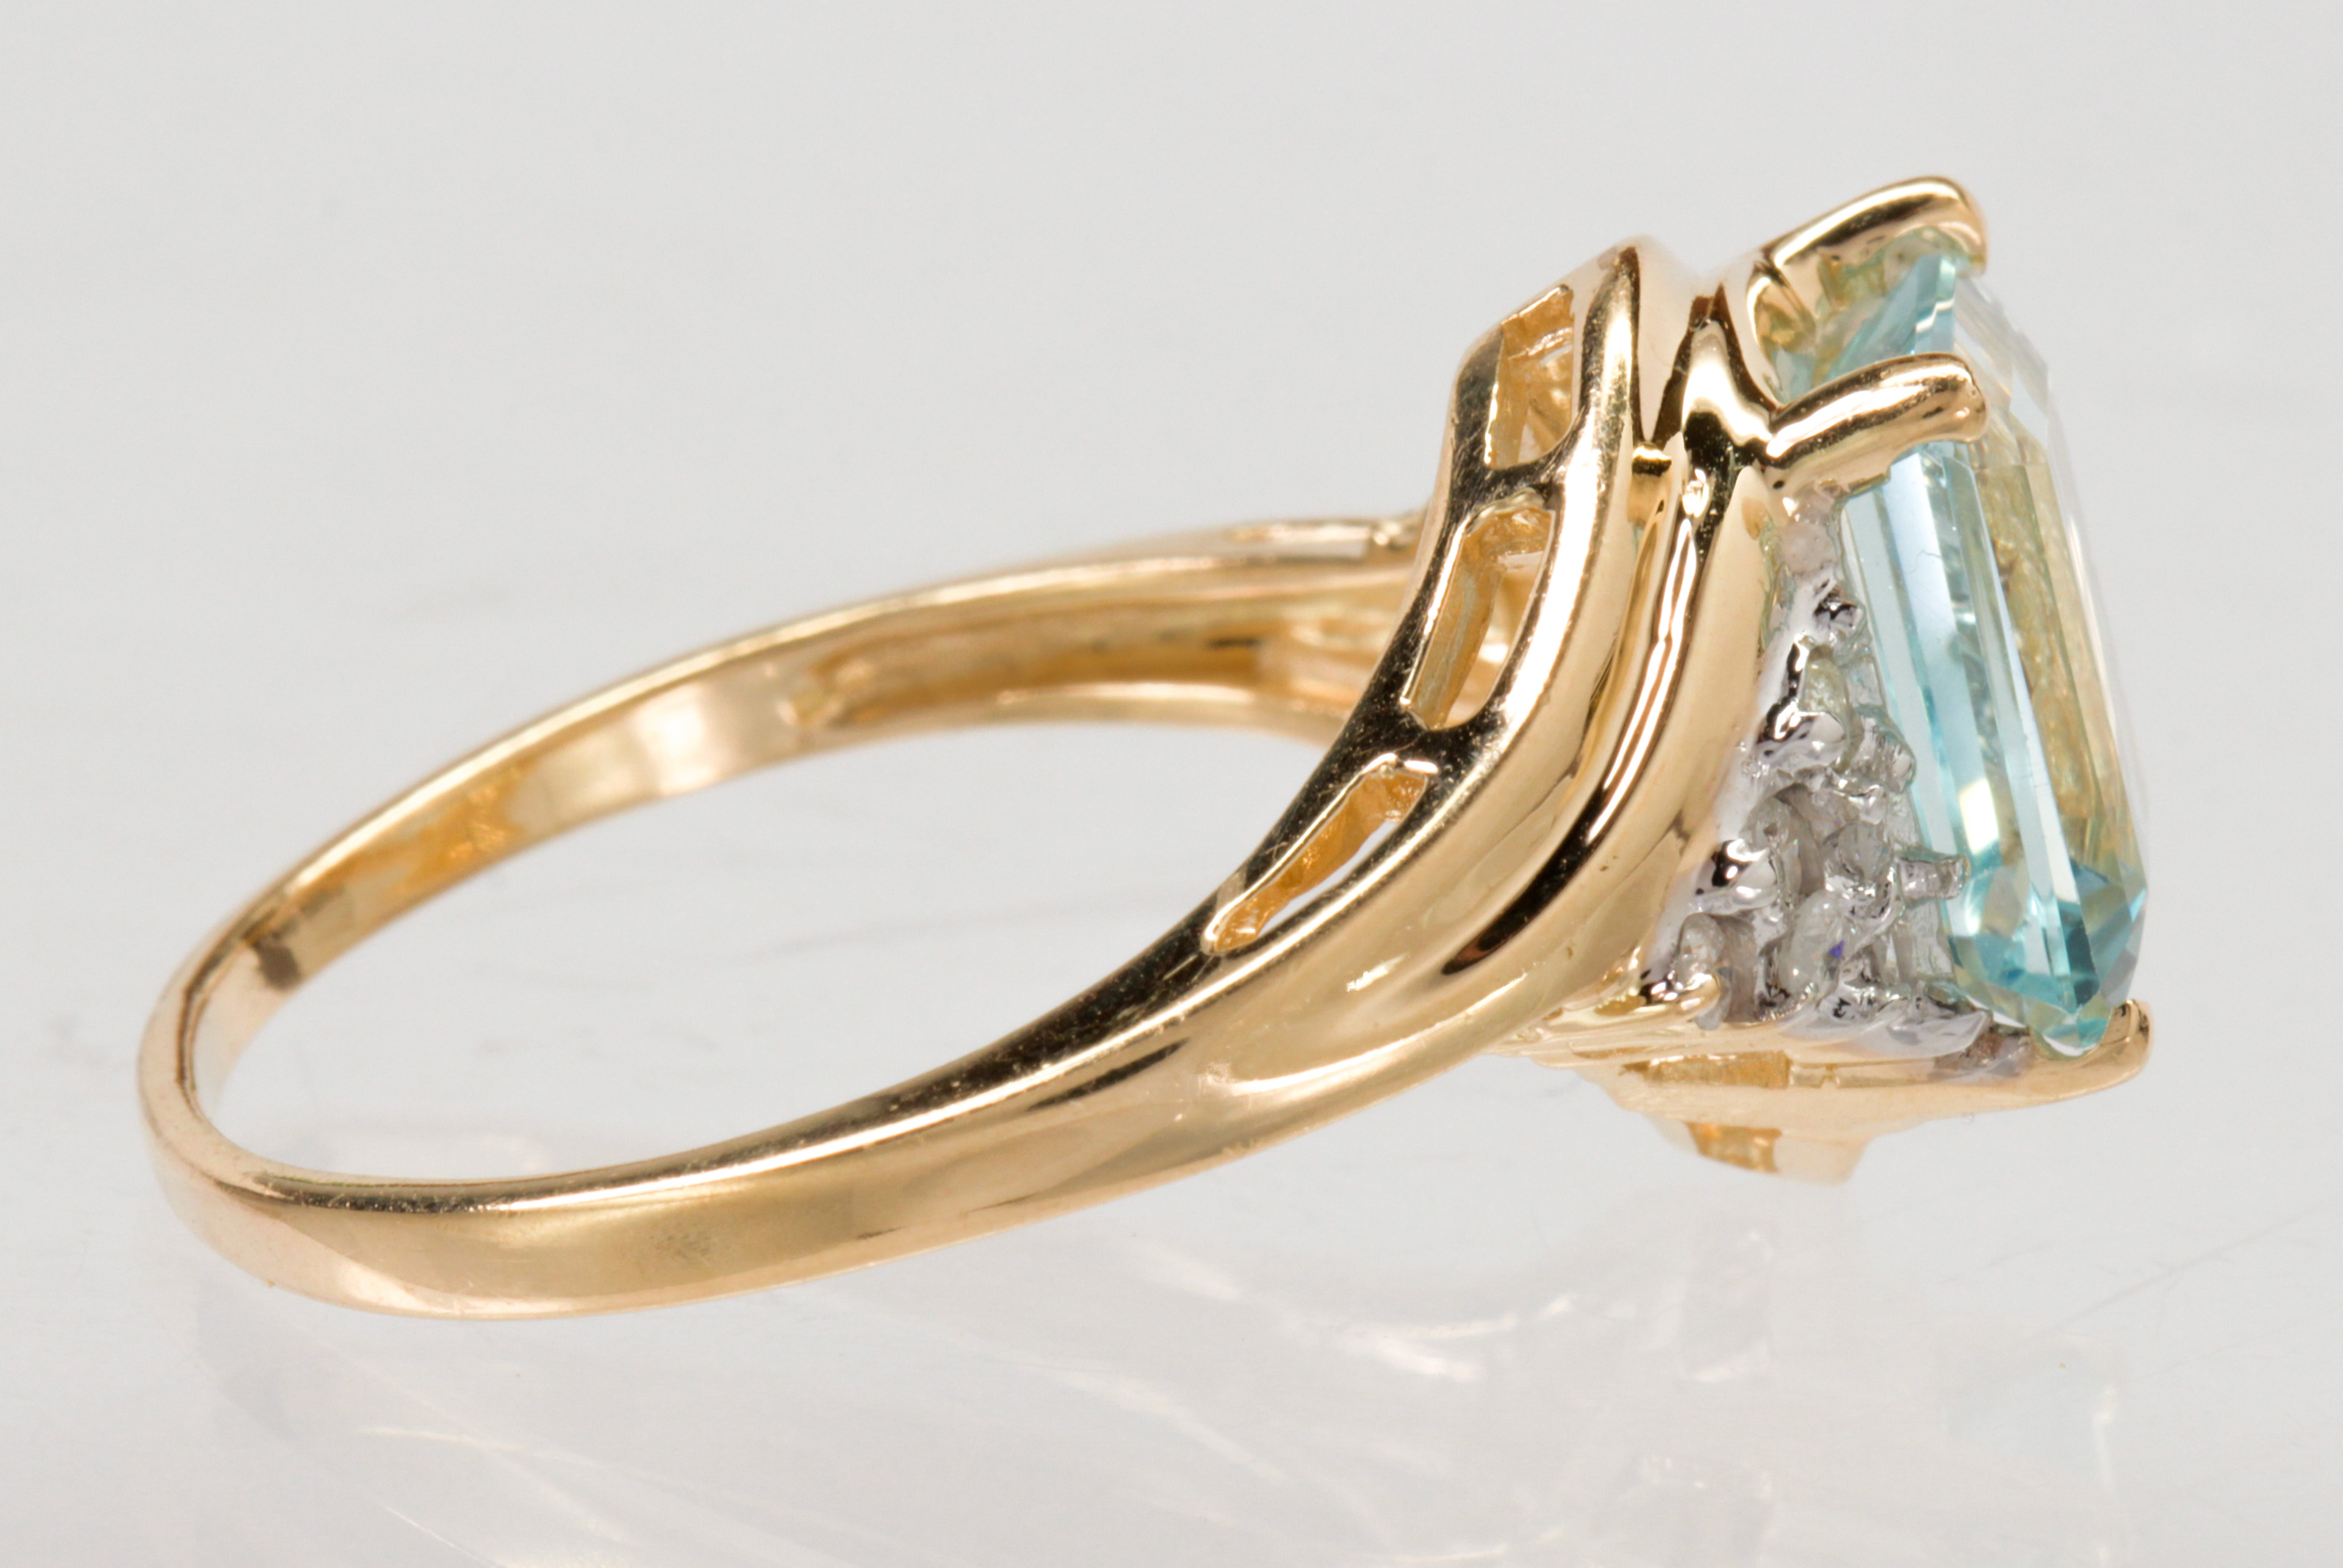 Aquamarine, diamond and 14k yellow gold ring - Image 2 of 2